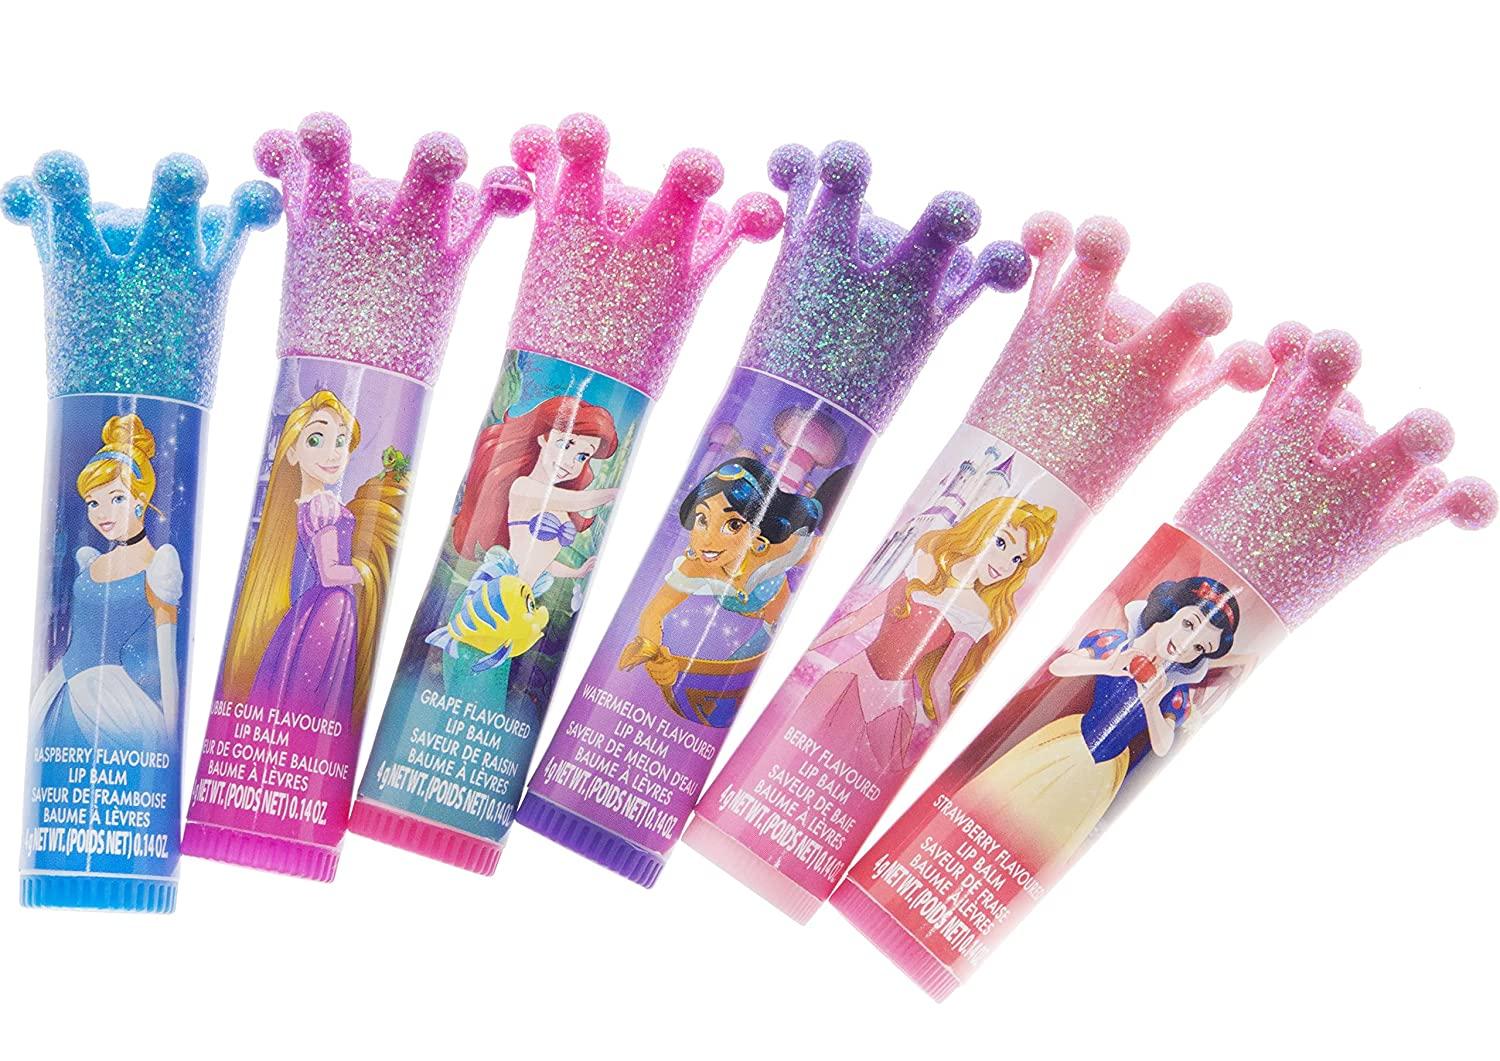 10. Townley Girl Disney Princess Non-Toxic Peel-Off Nail Polish Set for Kids - wide 4